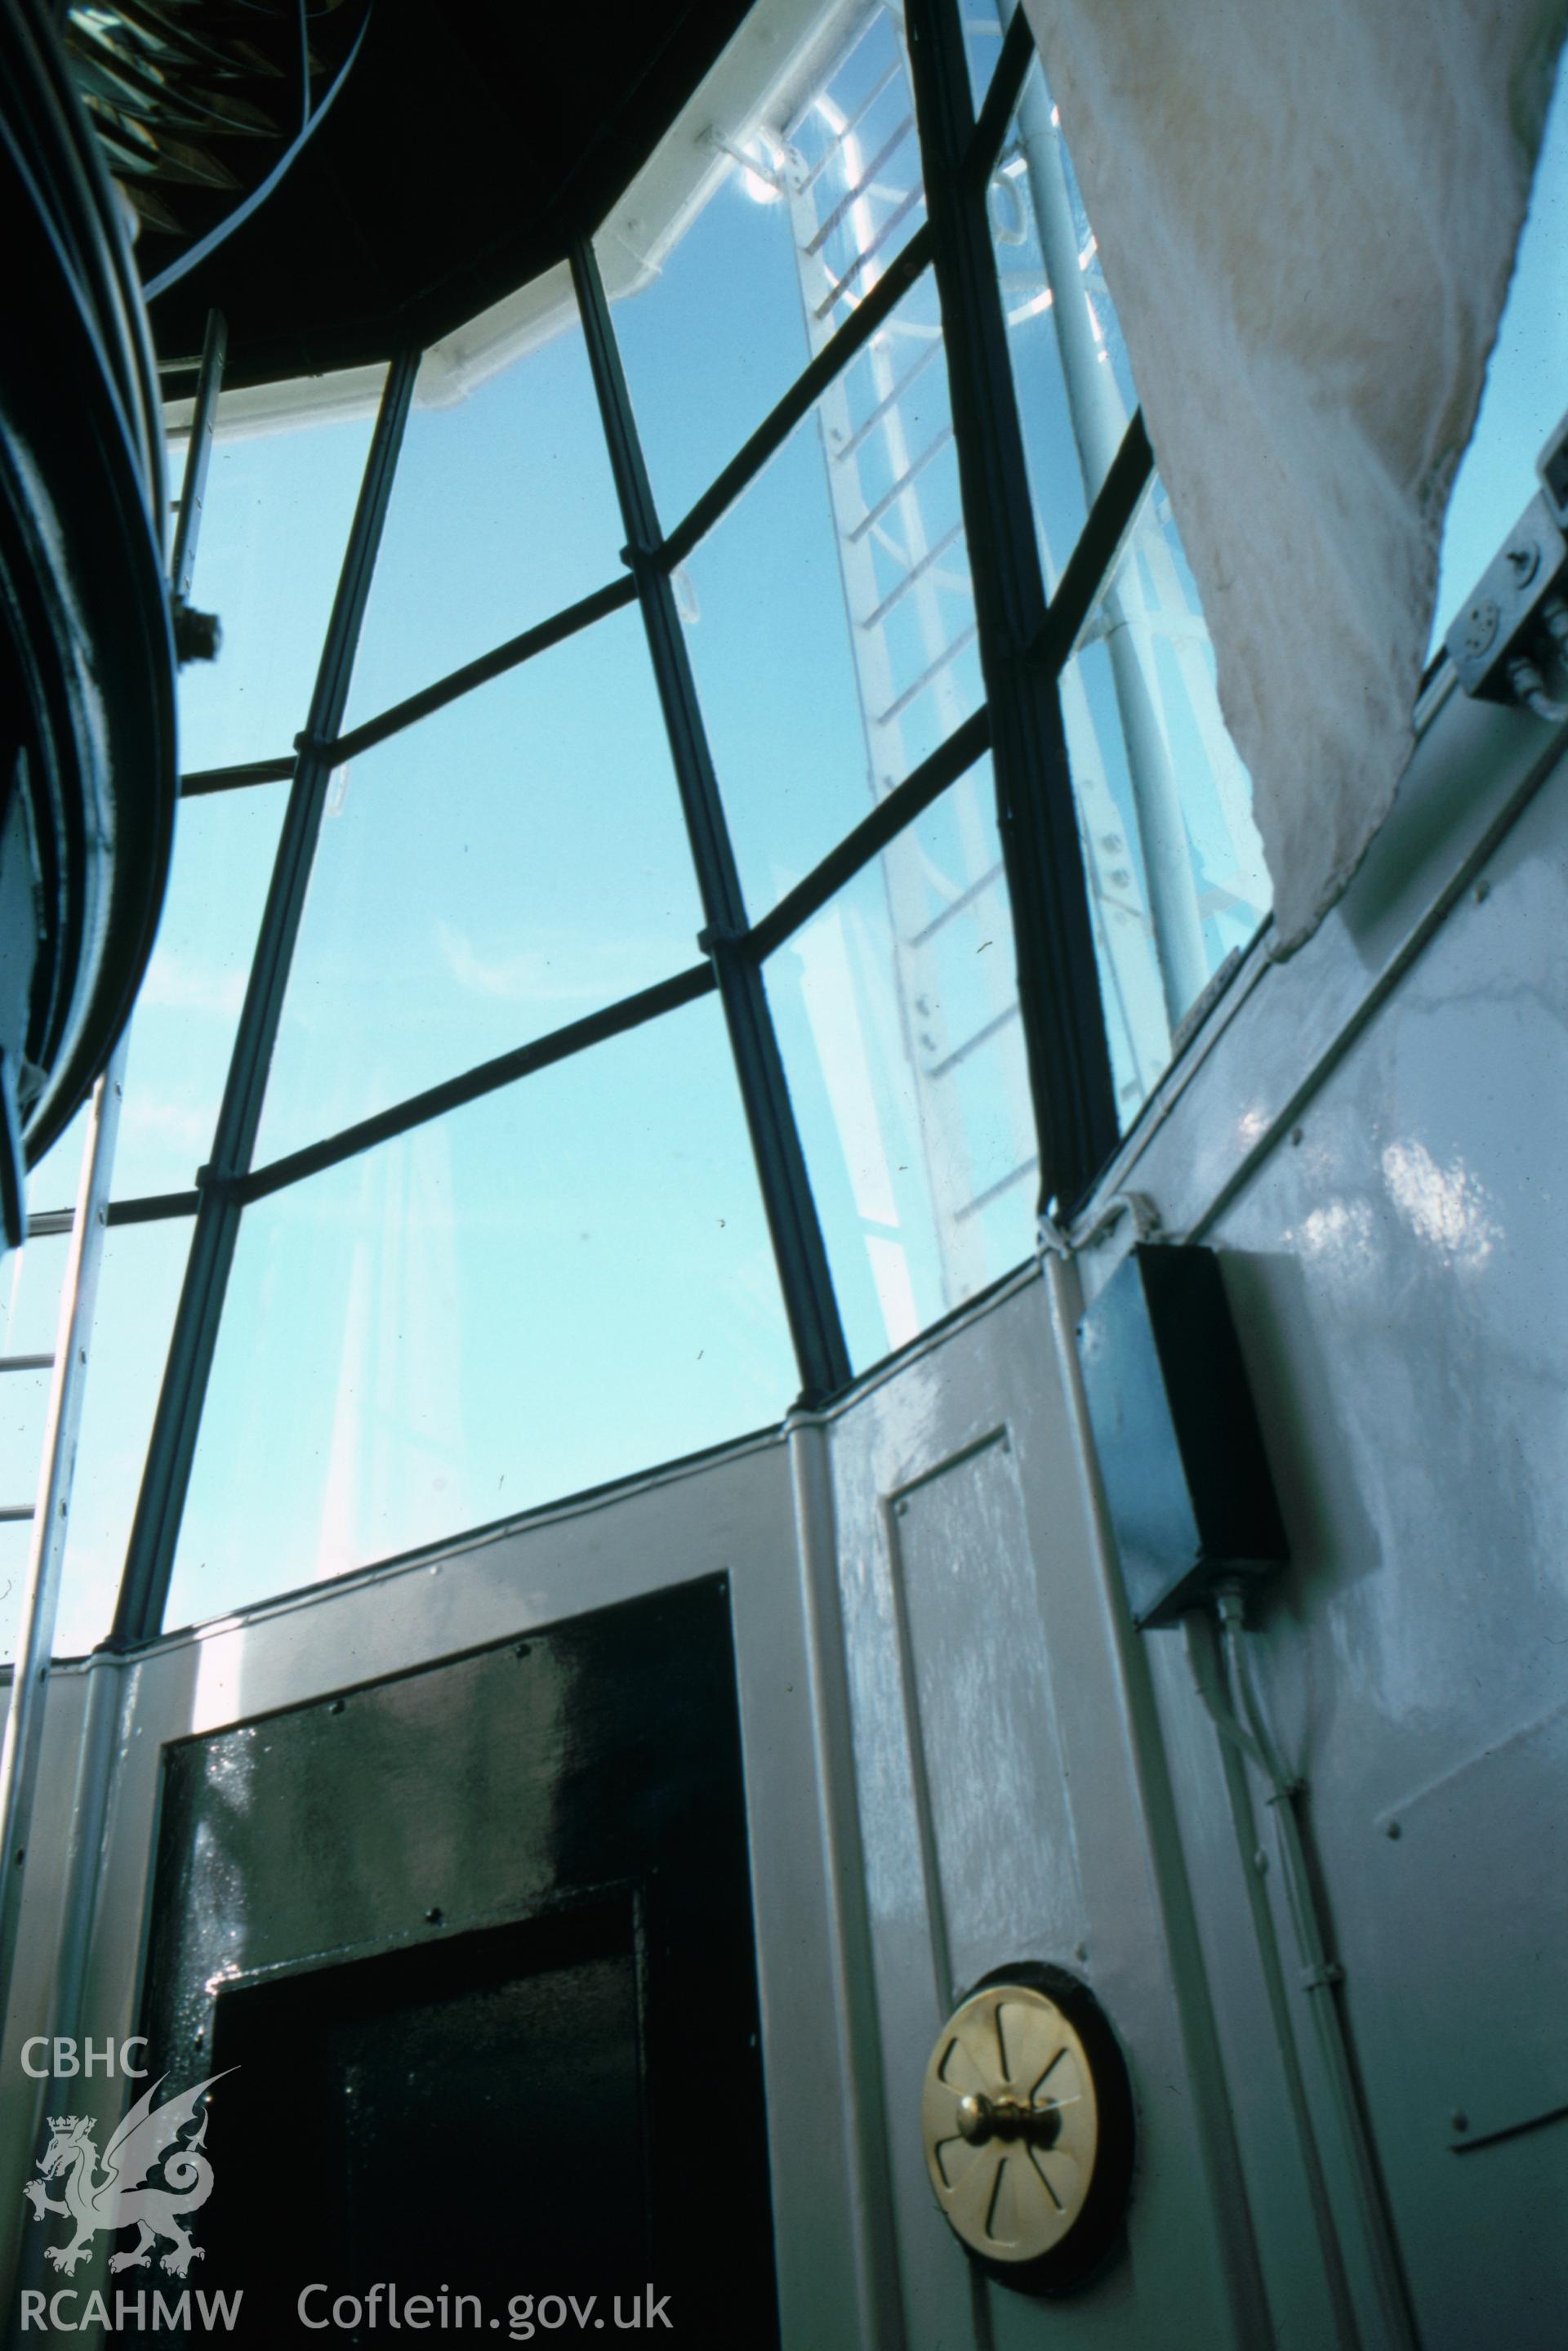 Colour slide showing interior detail of Bardsey Lighthouse.